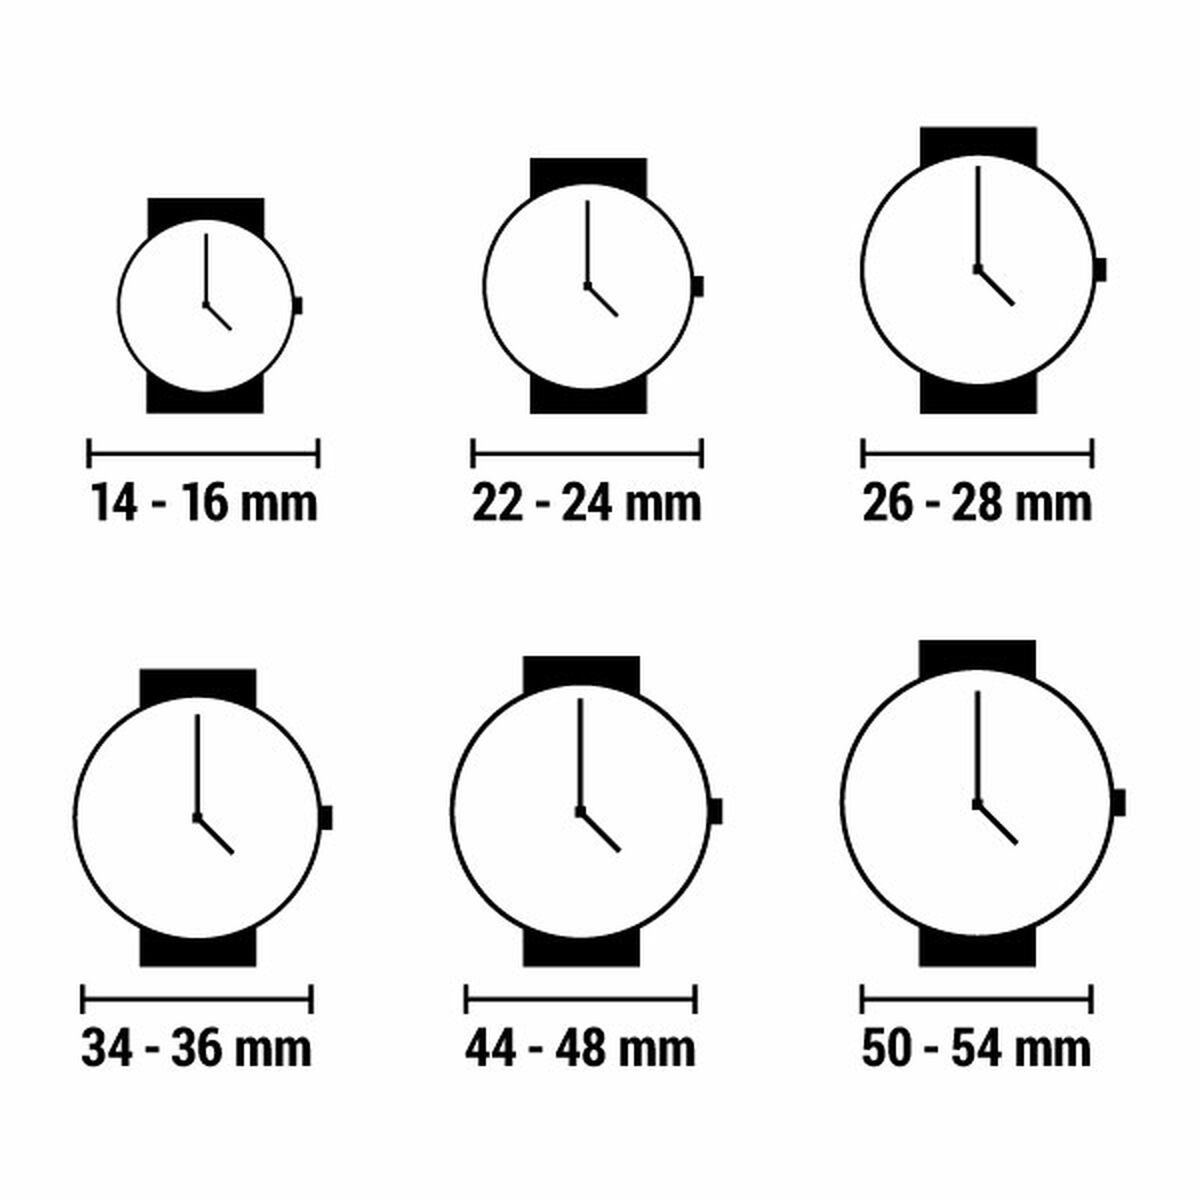 Horloge Dames Q&Q C223J014Y (Ø 30 mm)